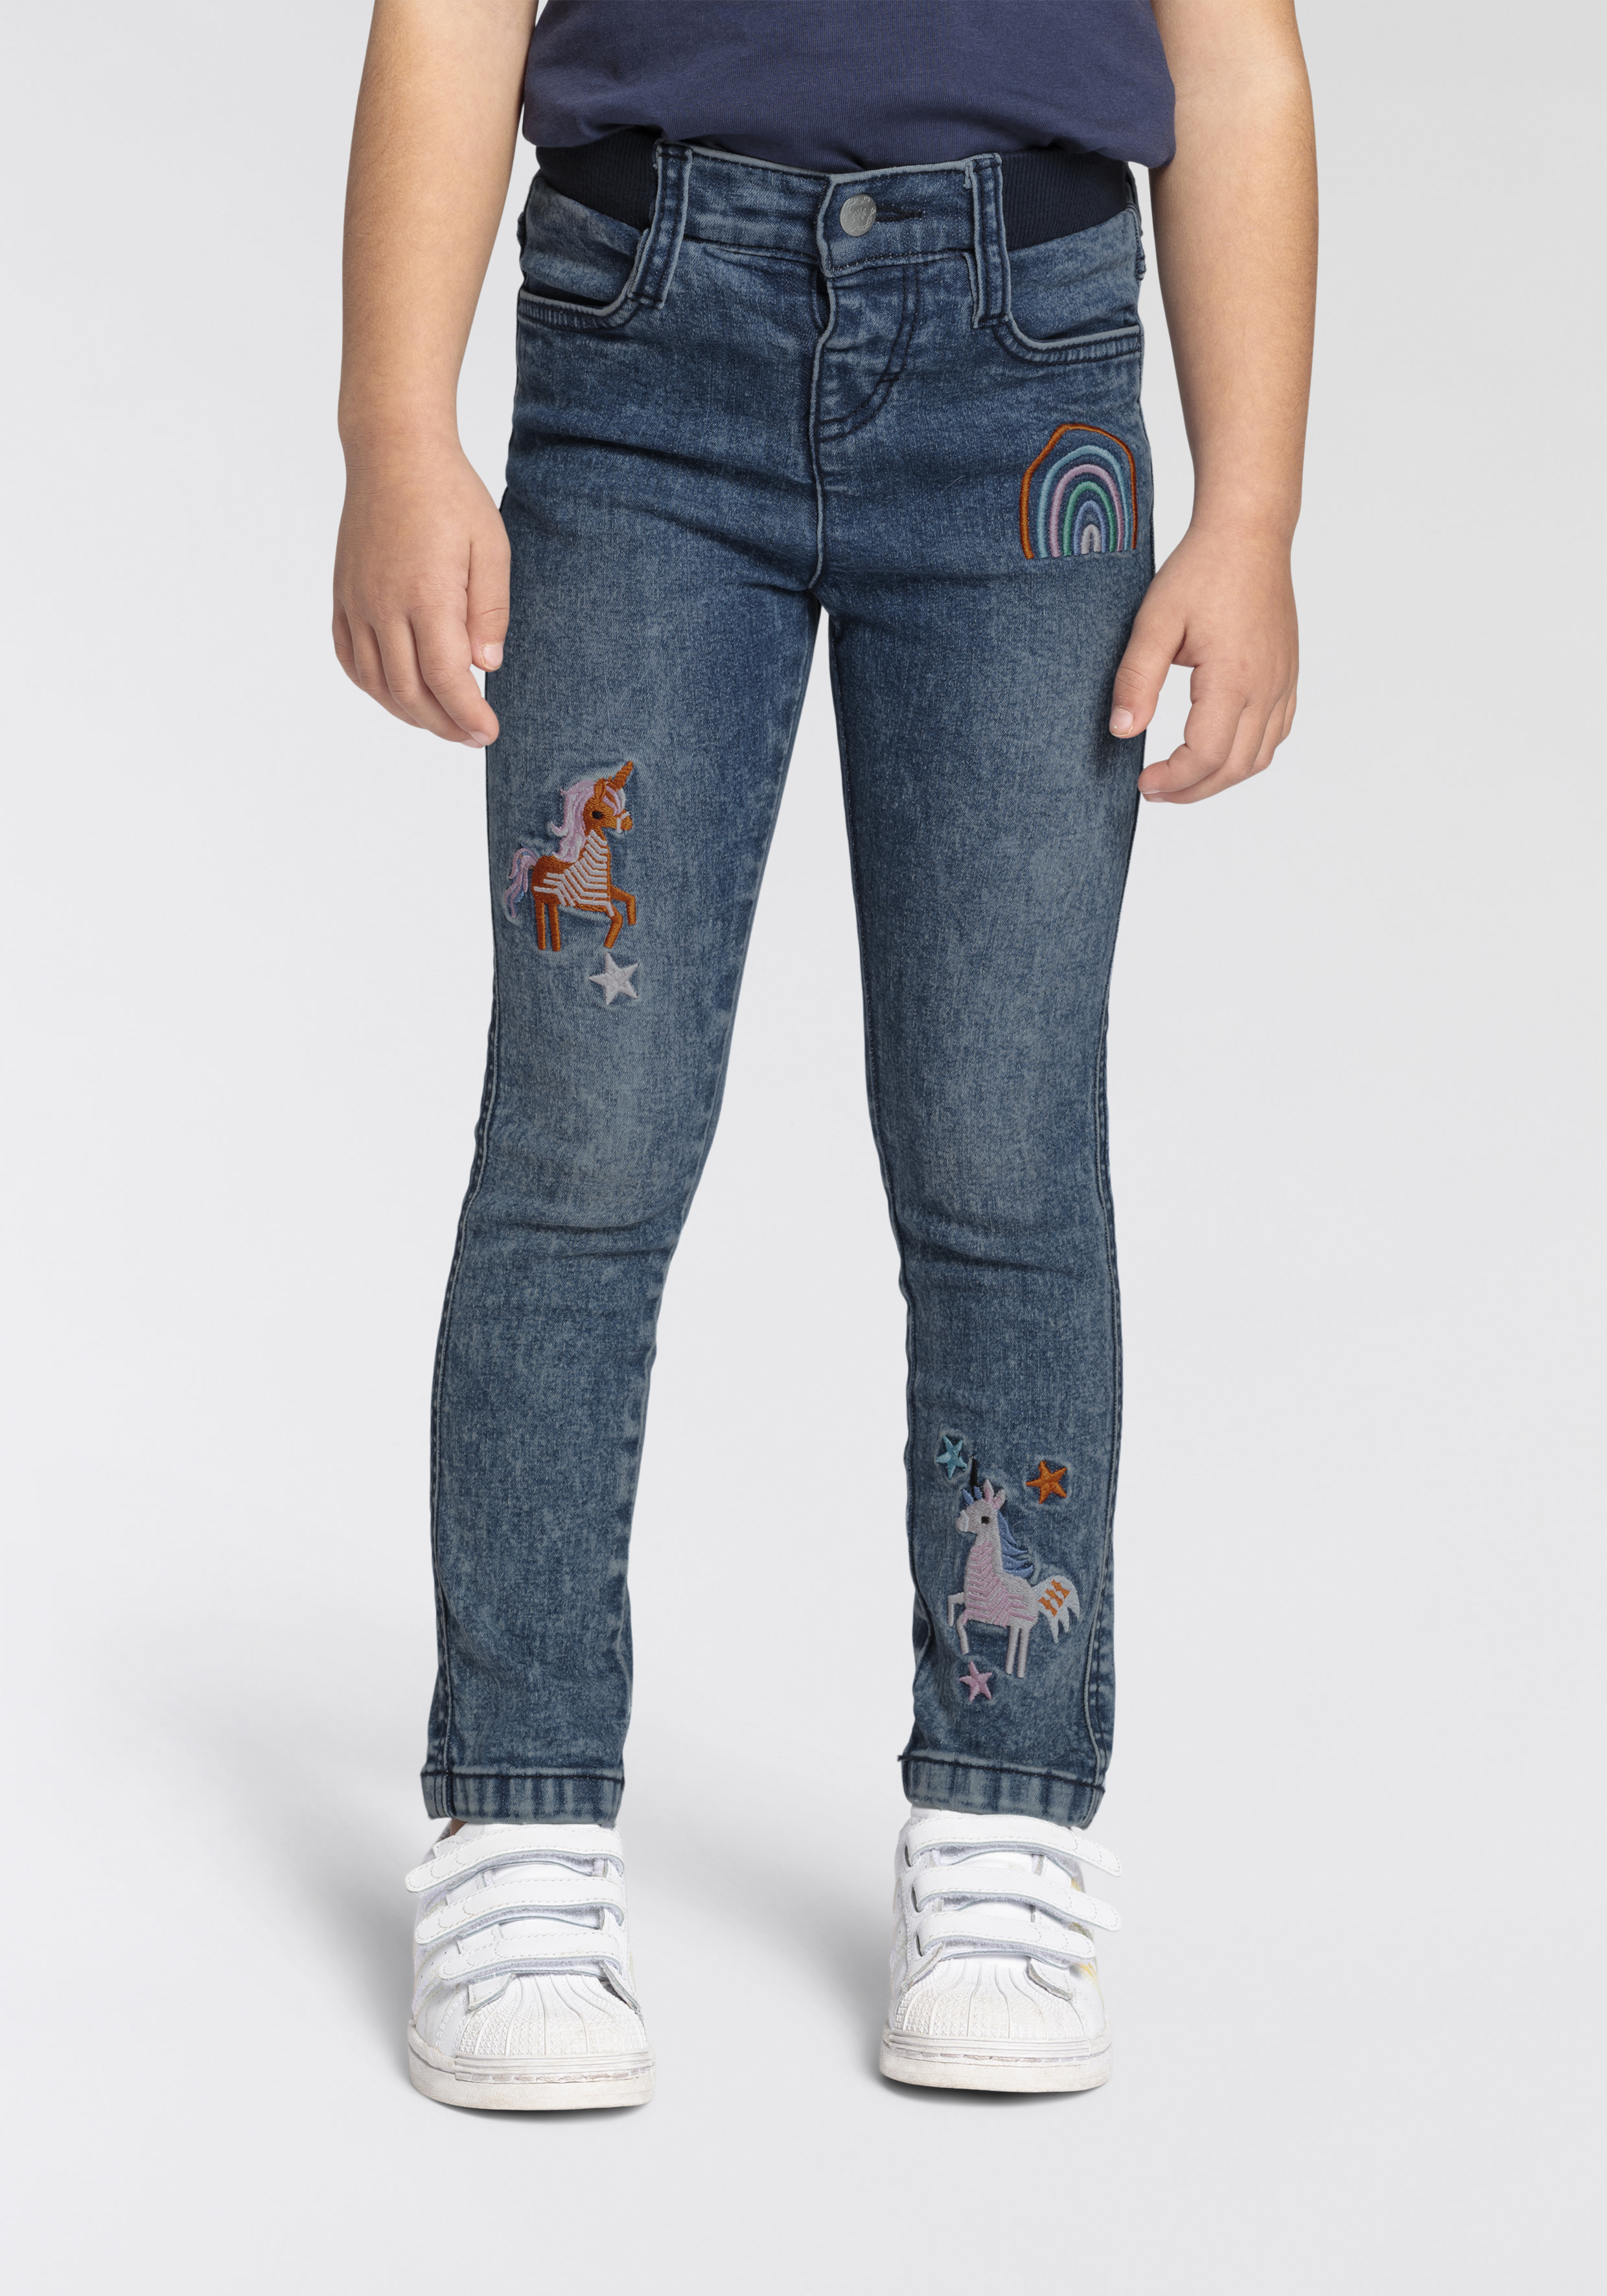 teddys jeans online kaufen | Jelmoli-Versand